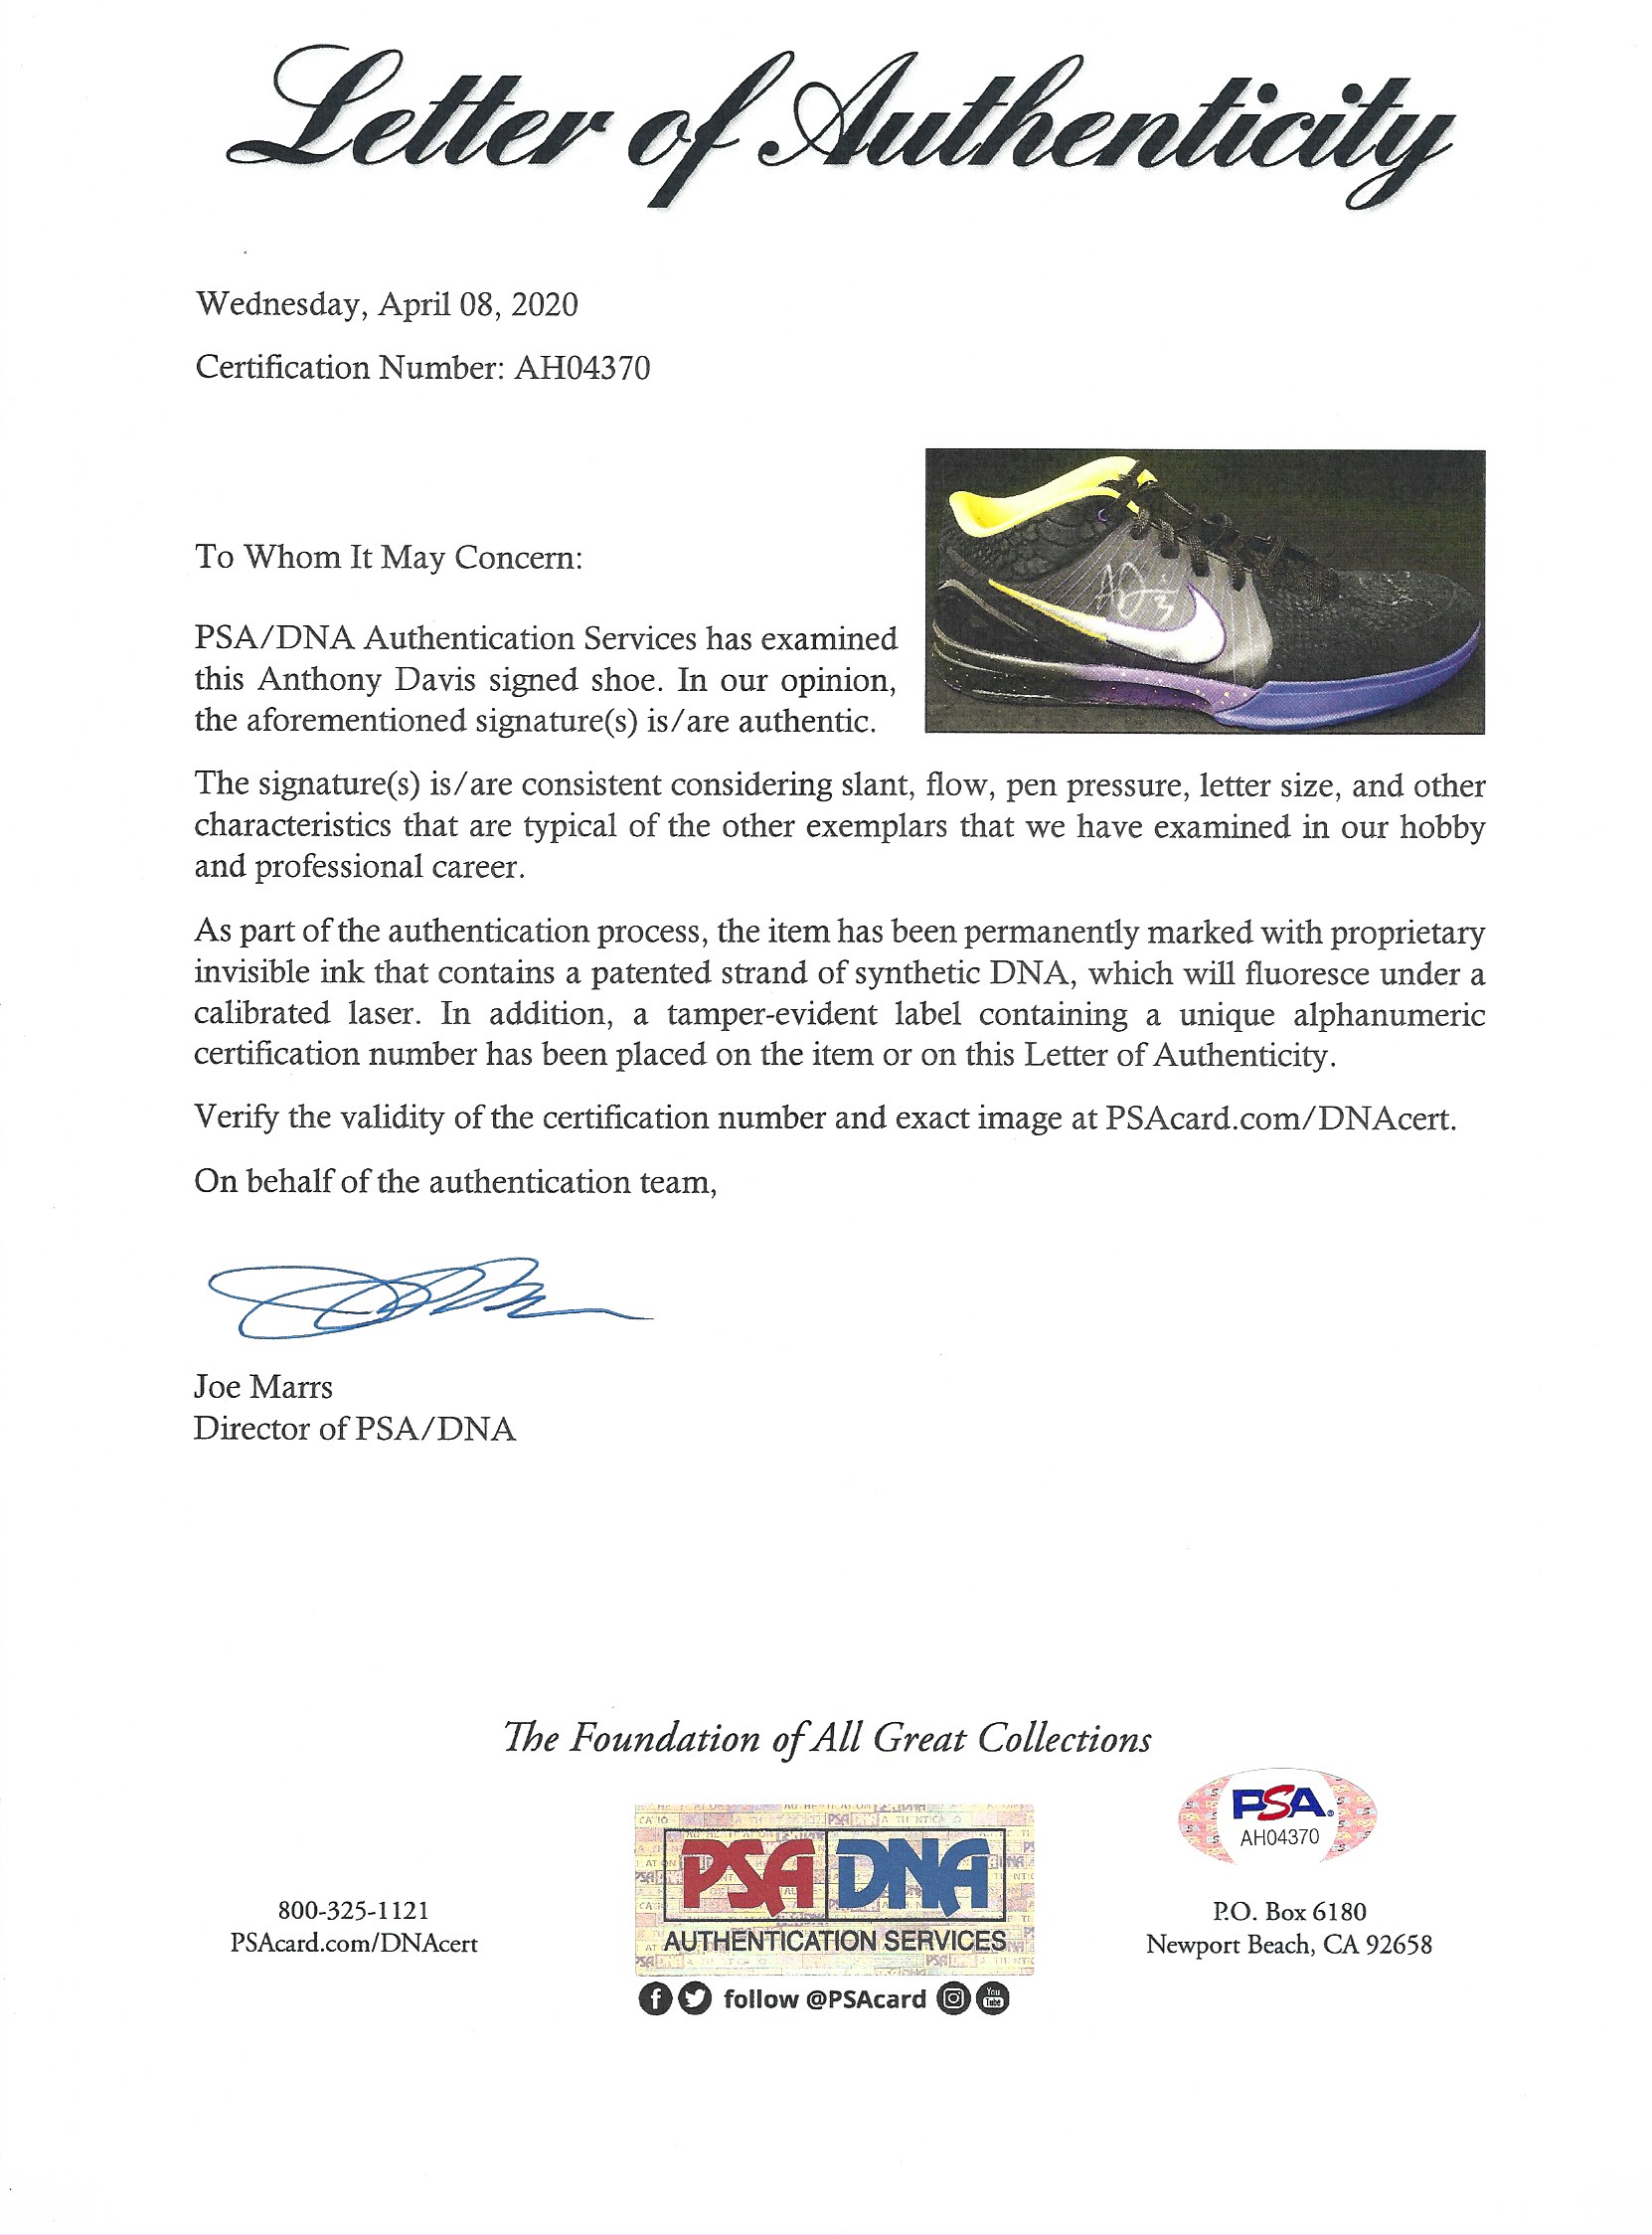 Anthony Davis Autographed Signed Lakers Nike Pe Ltd Shoes PSA/DNA